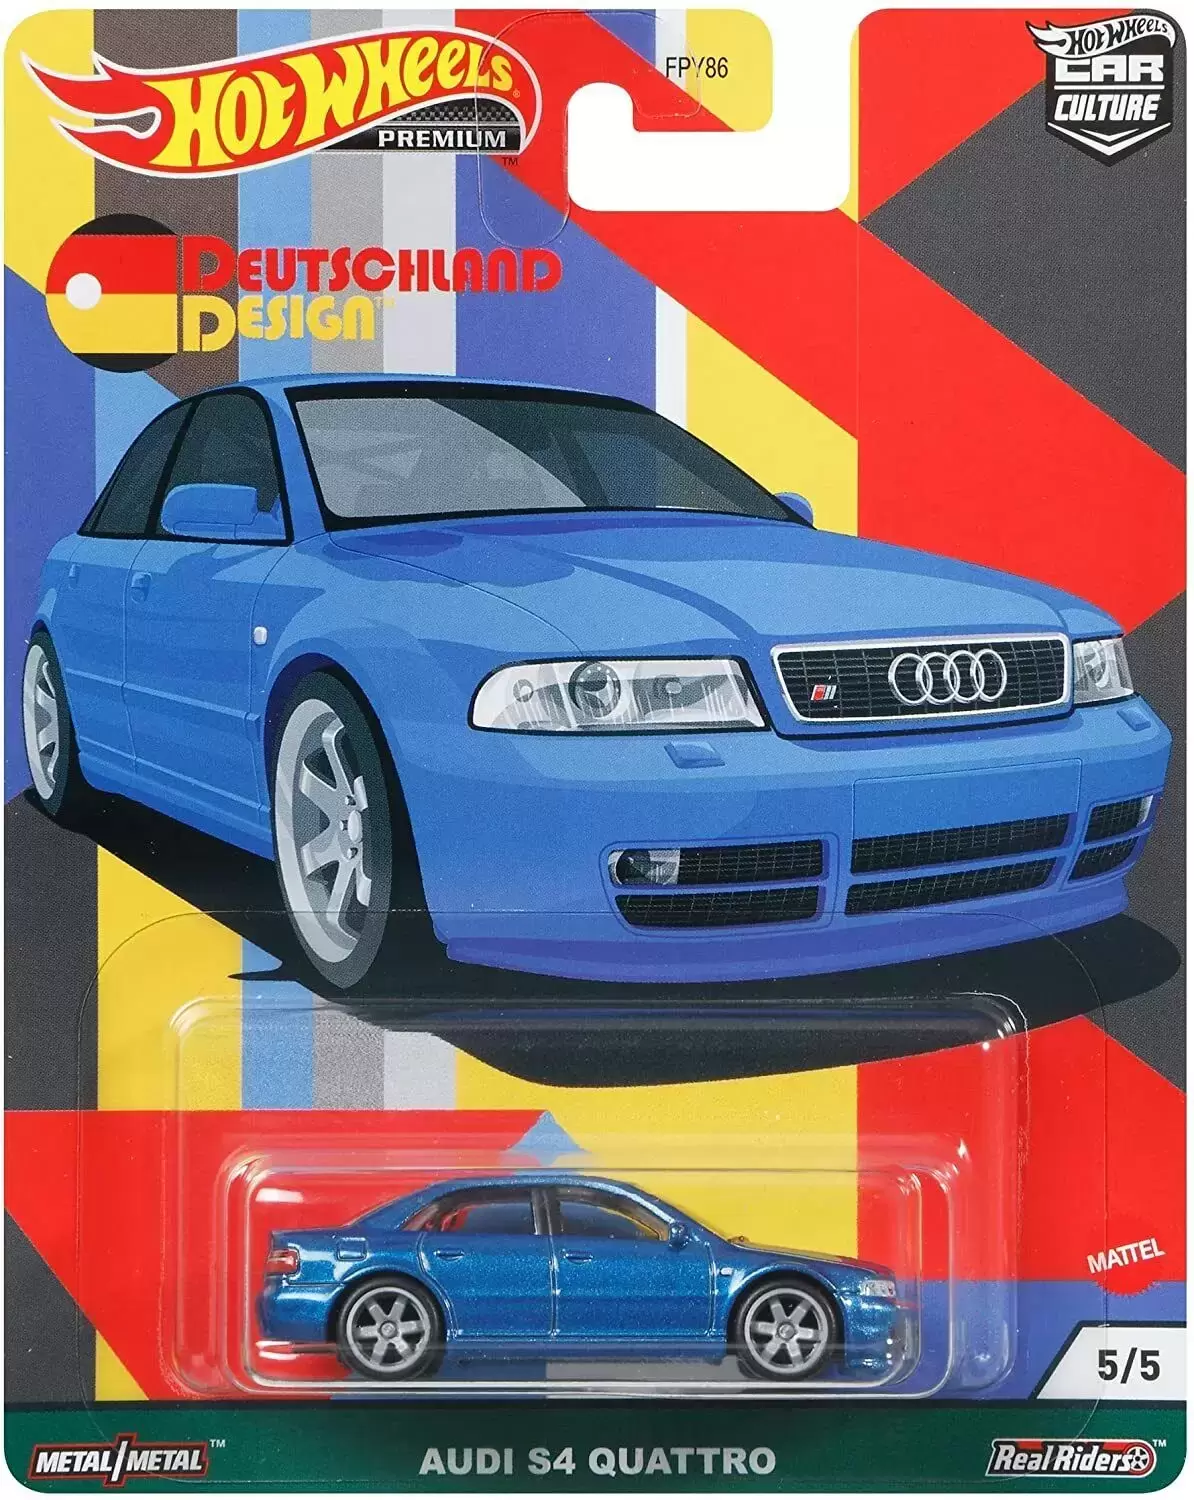 Hot Wheels - Car Culture - Deutschland Design - Audi S4 Quattro